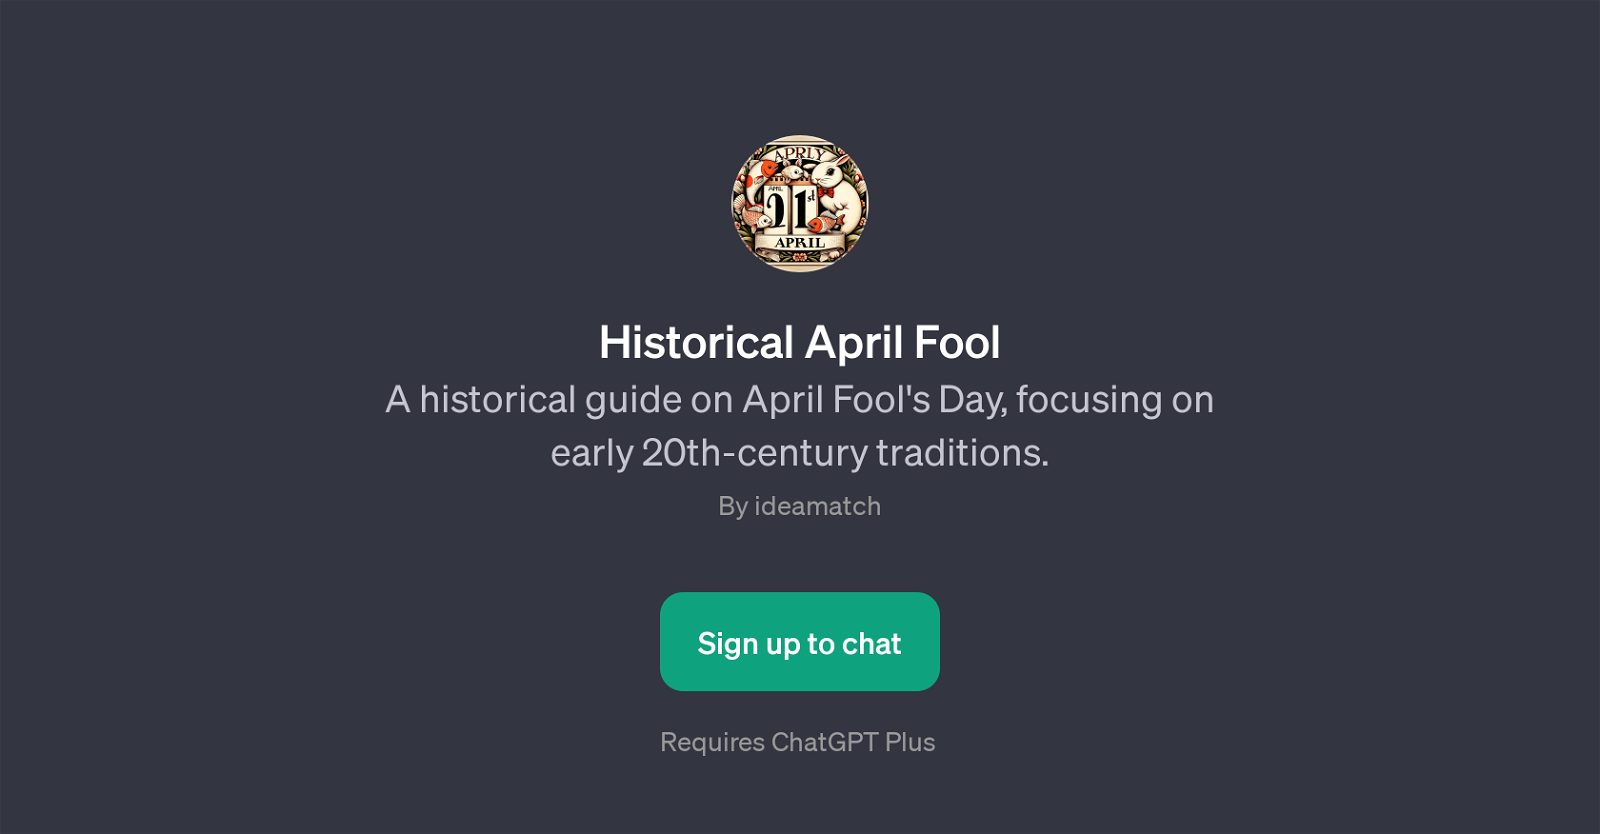 Historical April Fool website